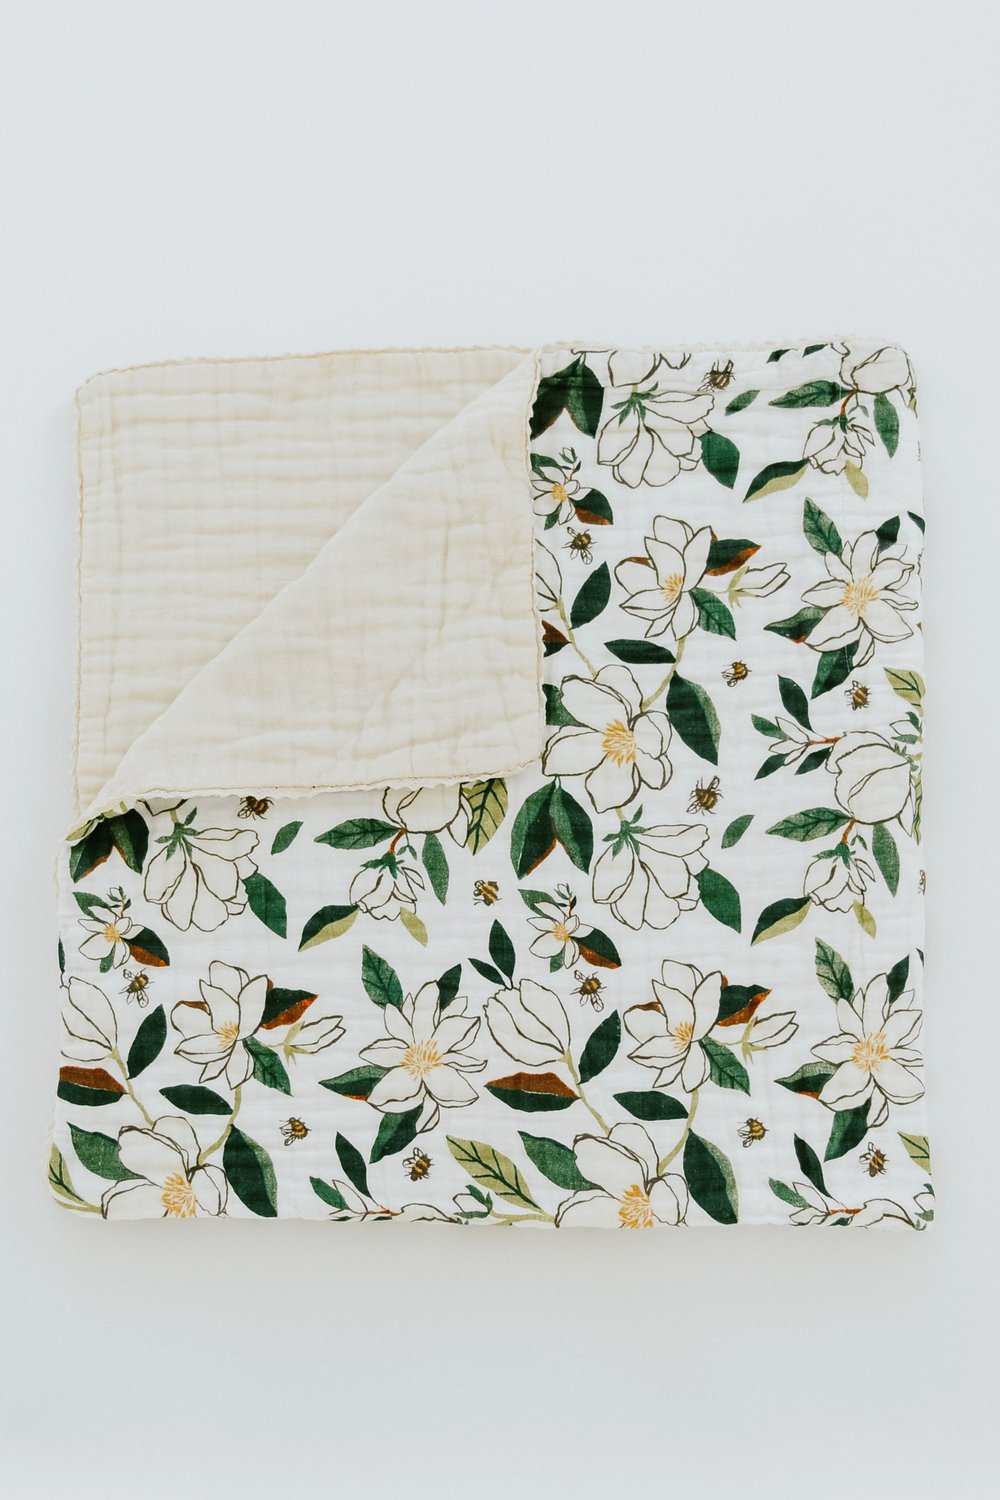 MAGNOLIA - Printed cotton quilt set - Peony chintz. Colour: light